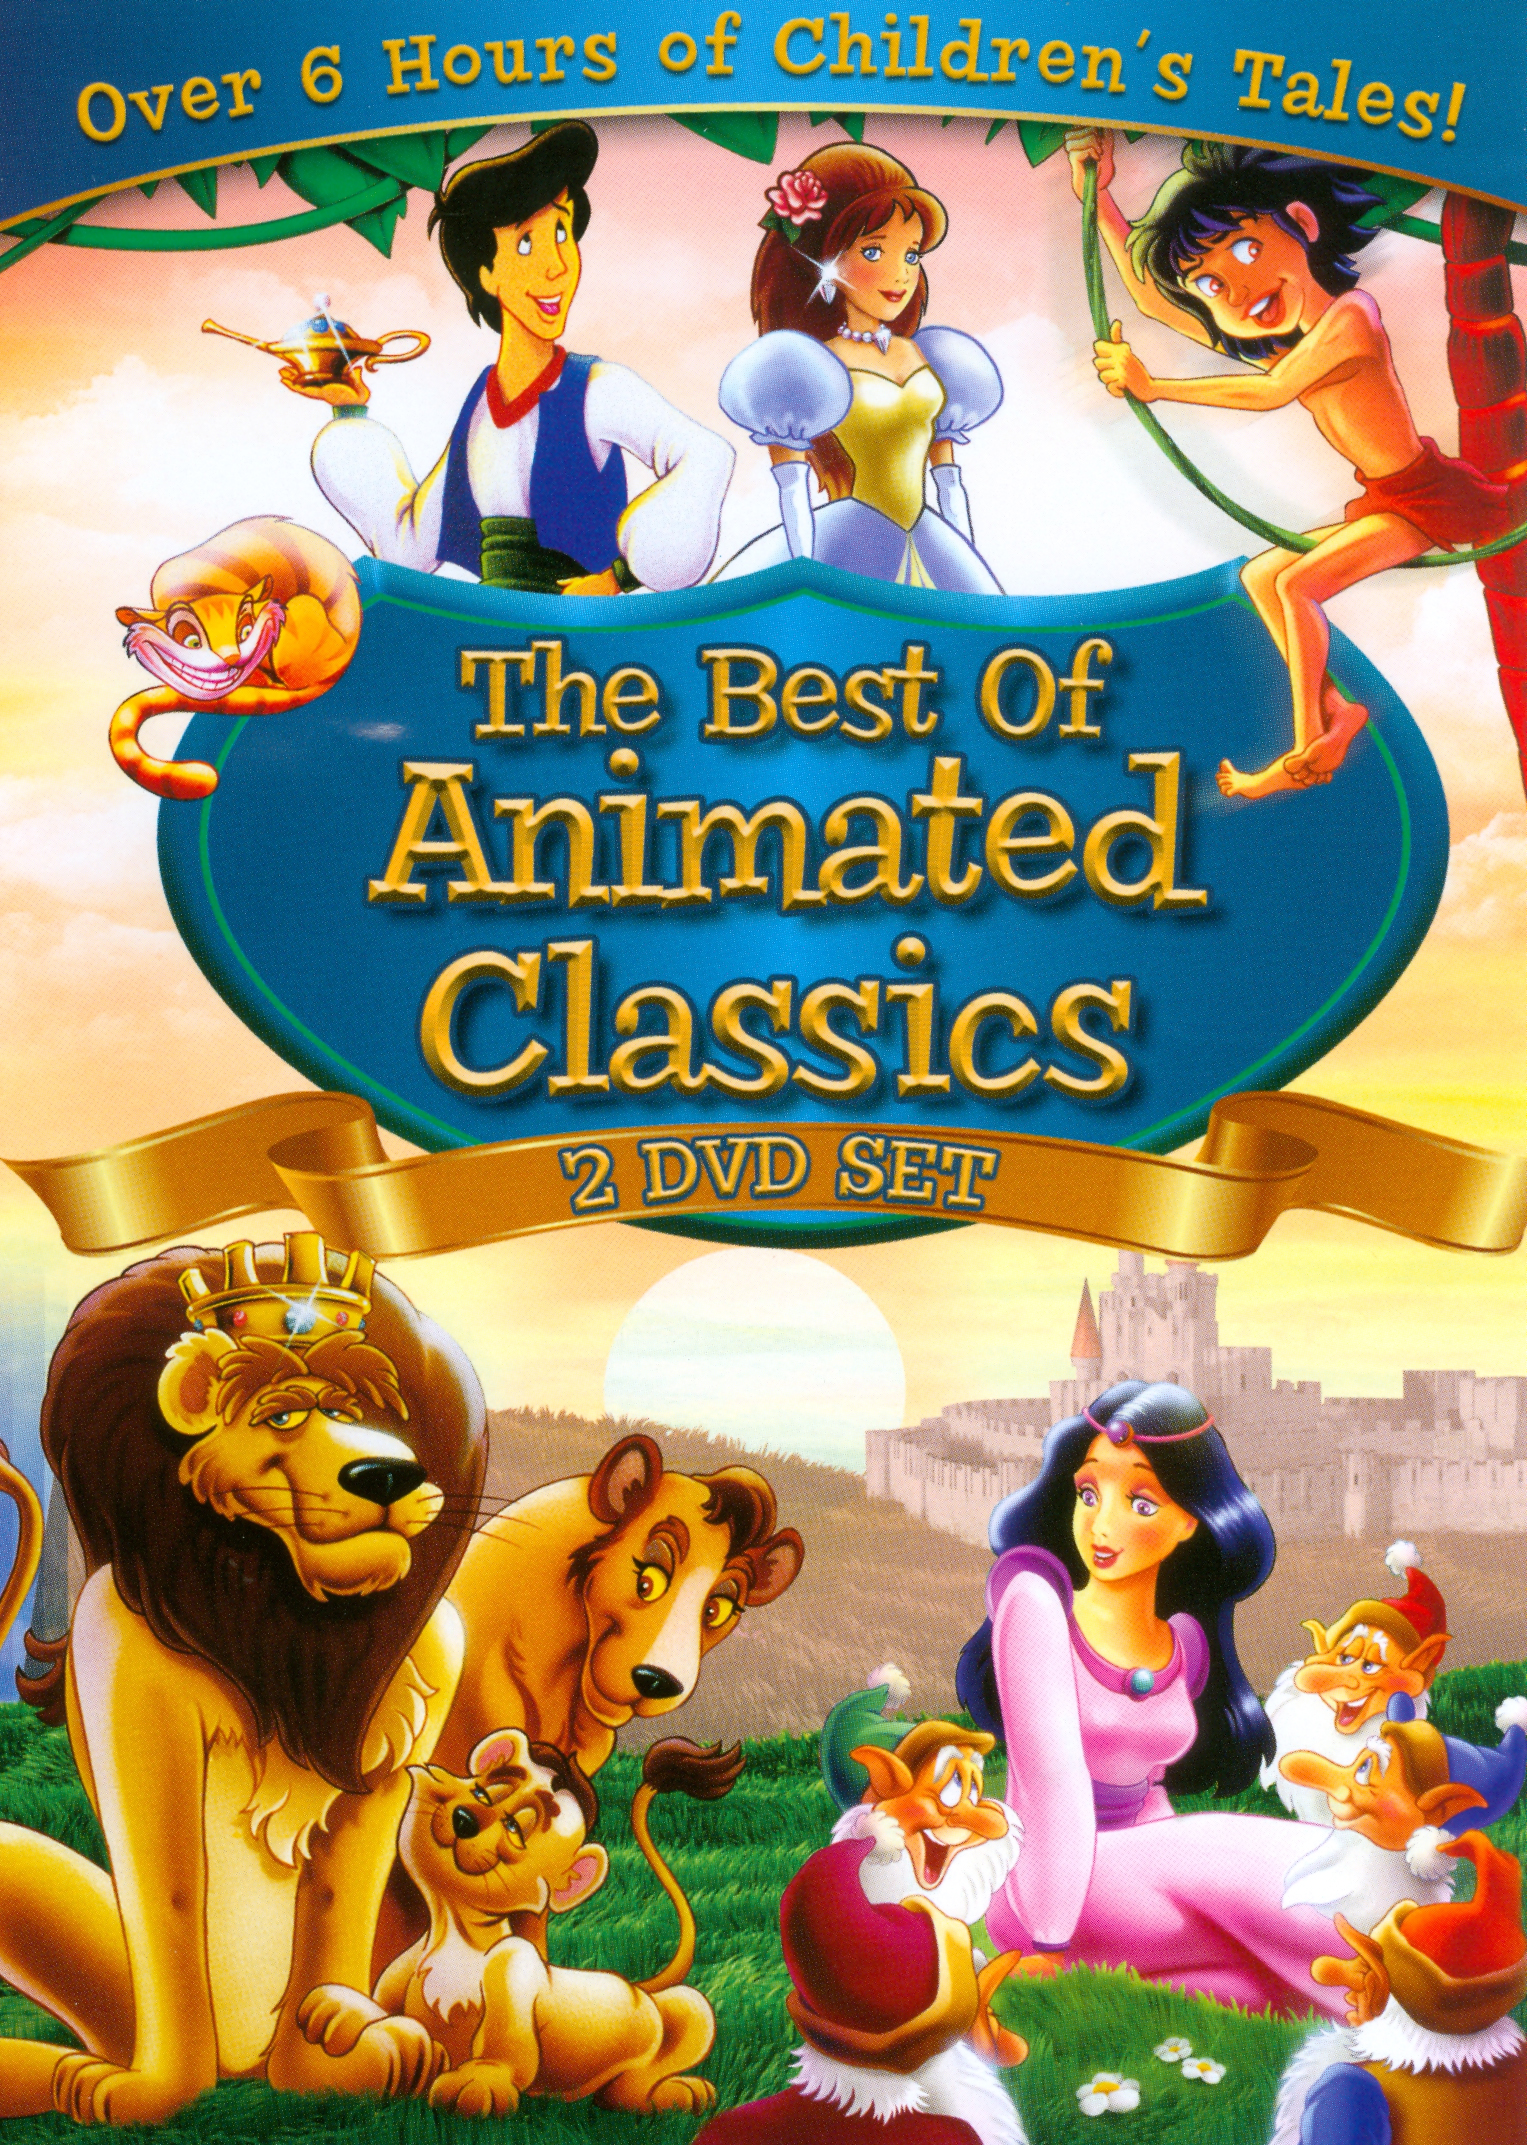 Best Buy: Classic Cartoons: Madcap Toons [2 Discs] [DVD]